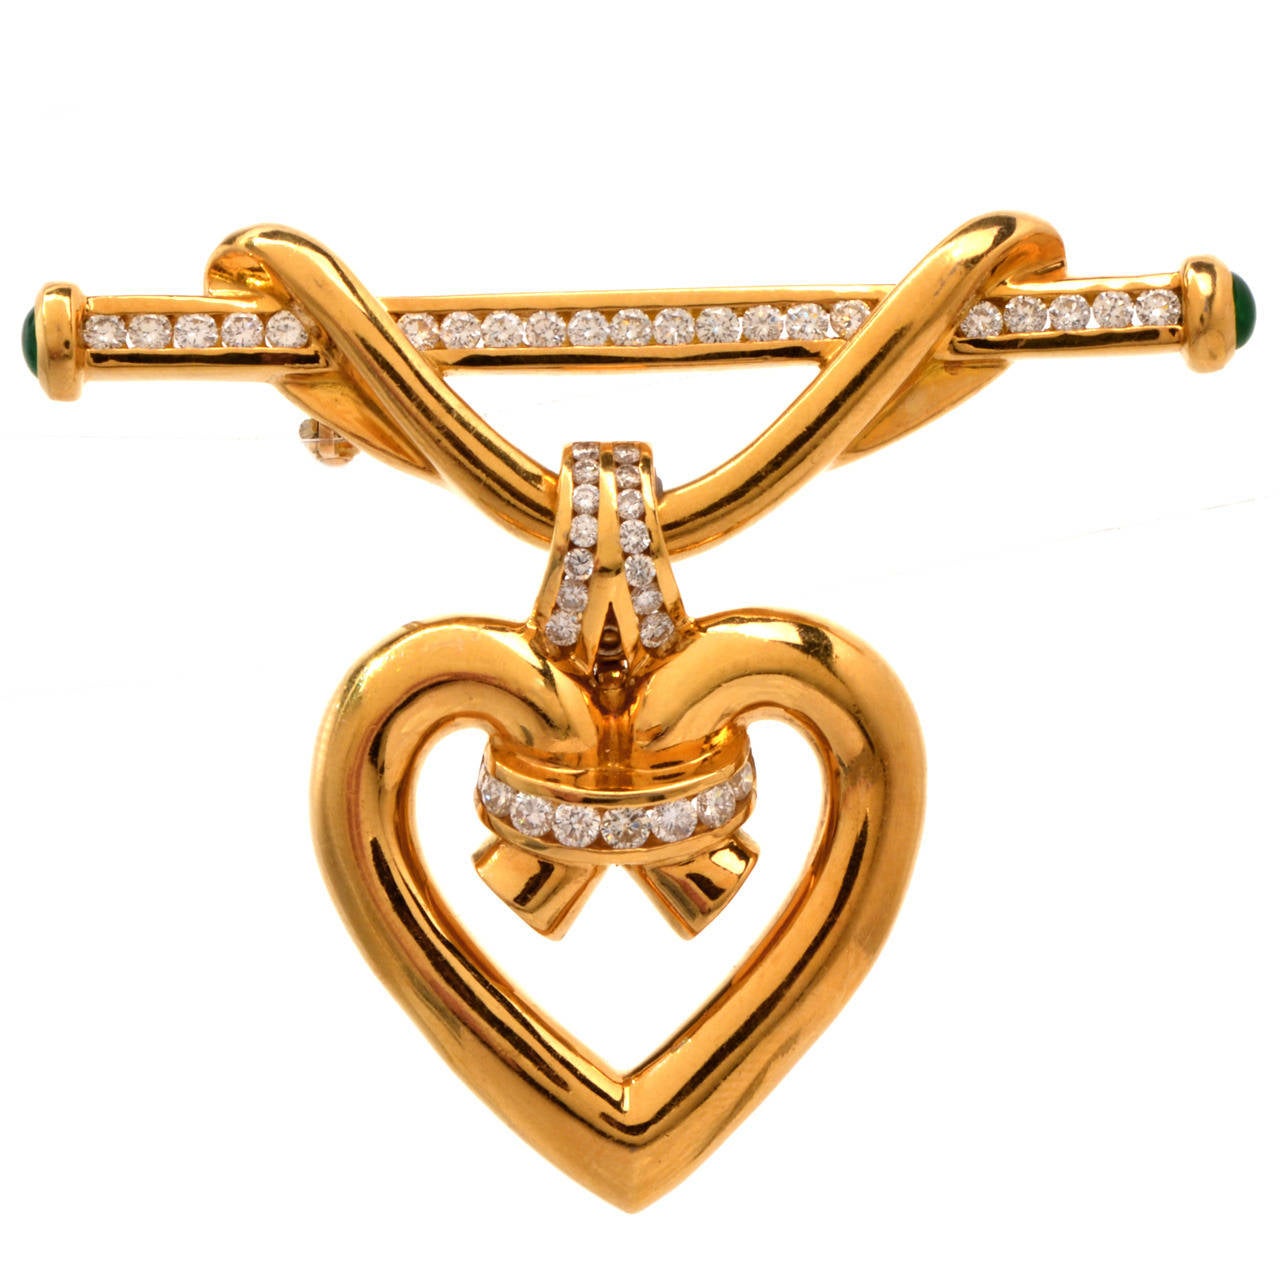 Krypell Emerald Diamond Gold Heart Pendant Brooch Pin